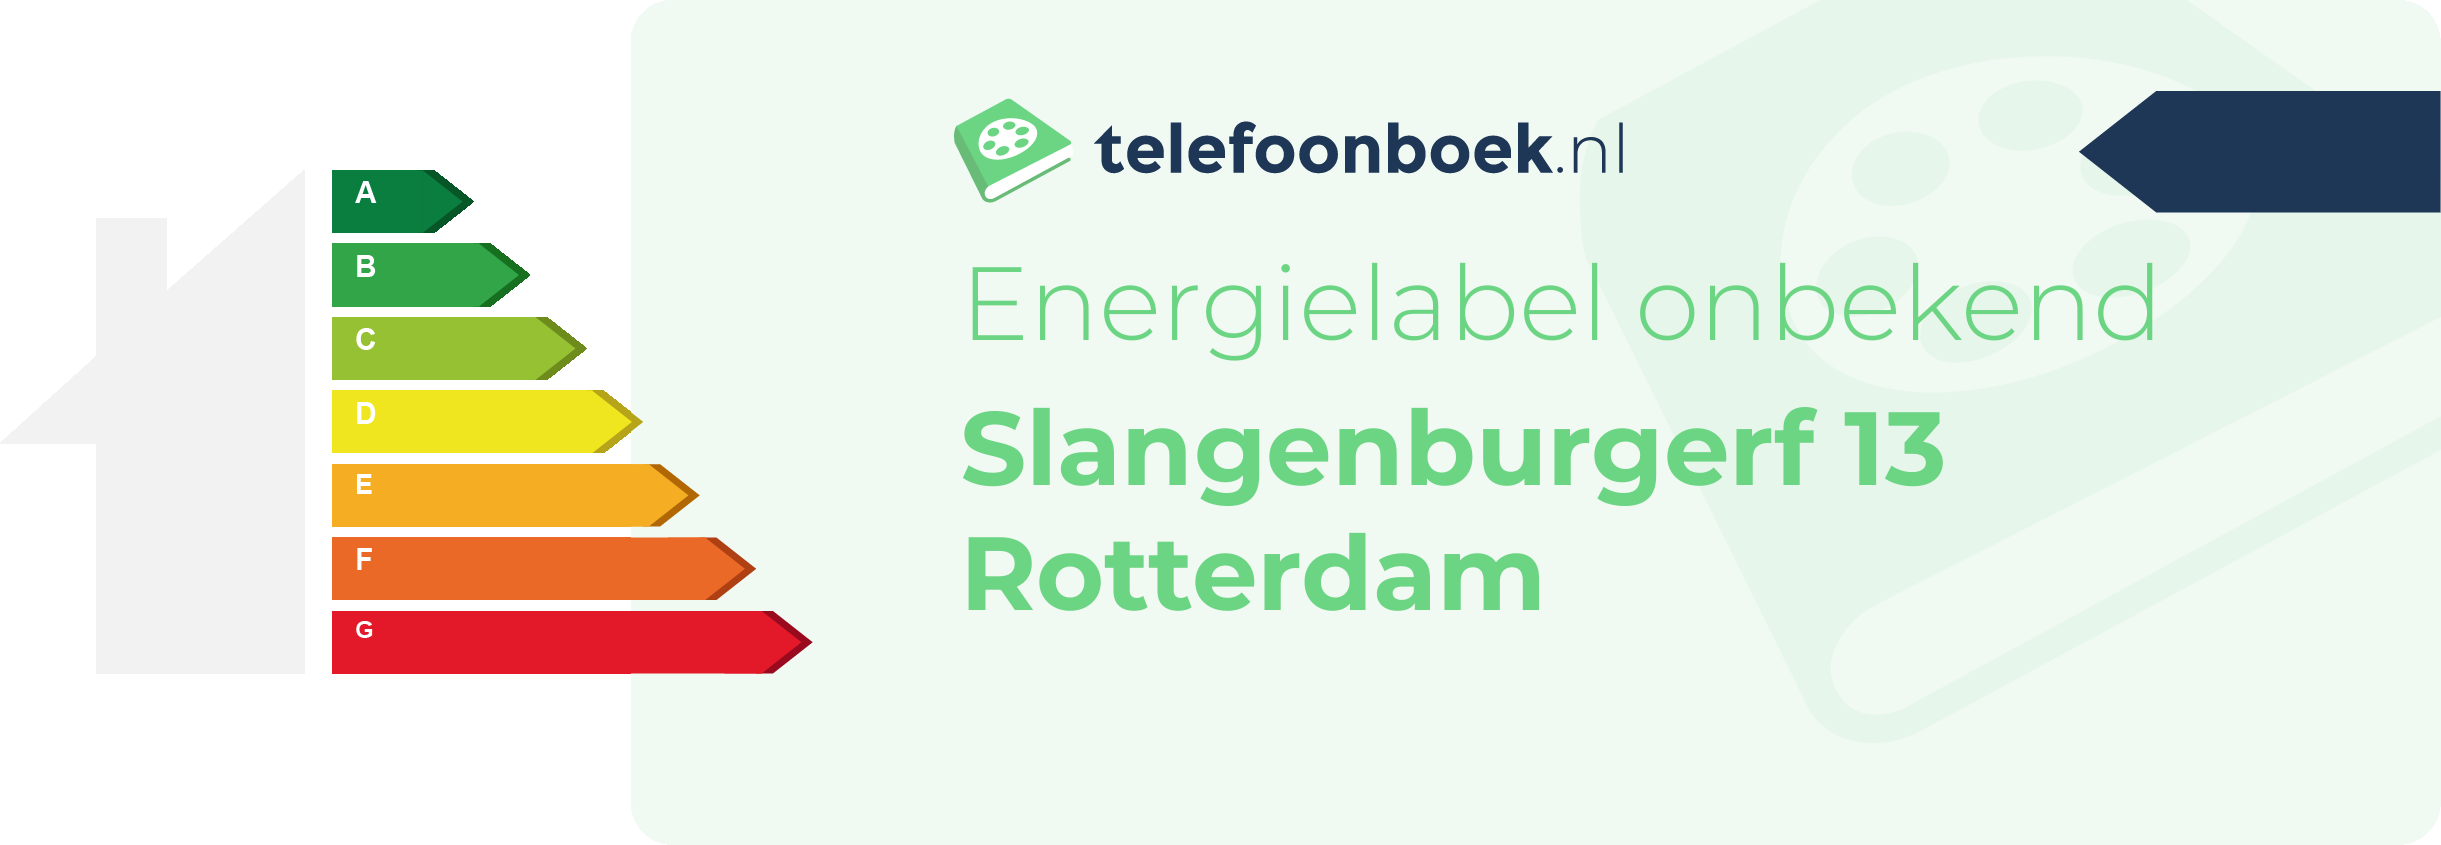 Energielabel Slangenburgerf 13 Rotterdam